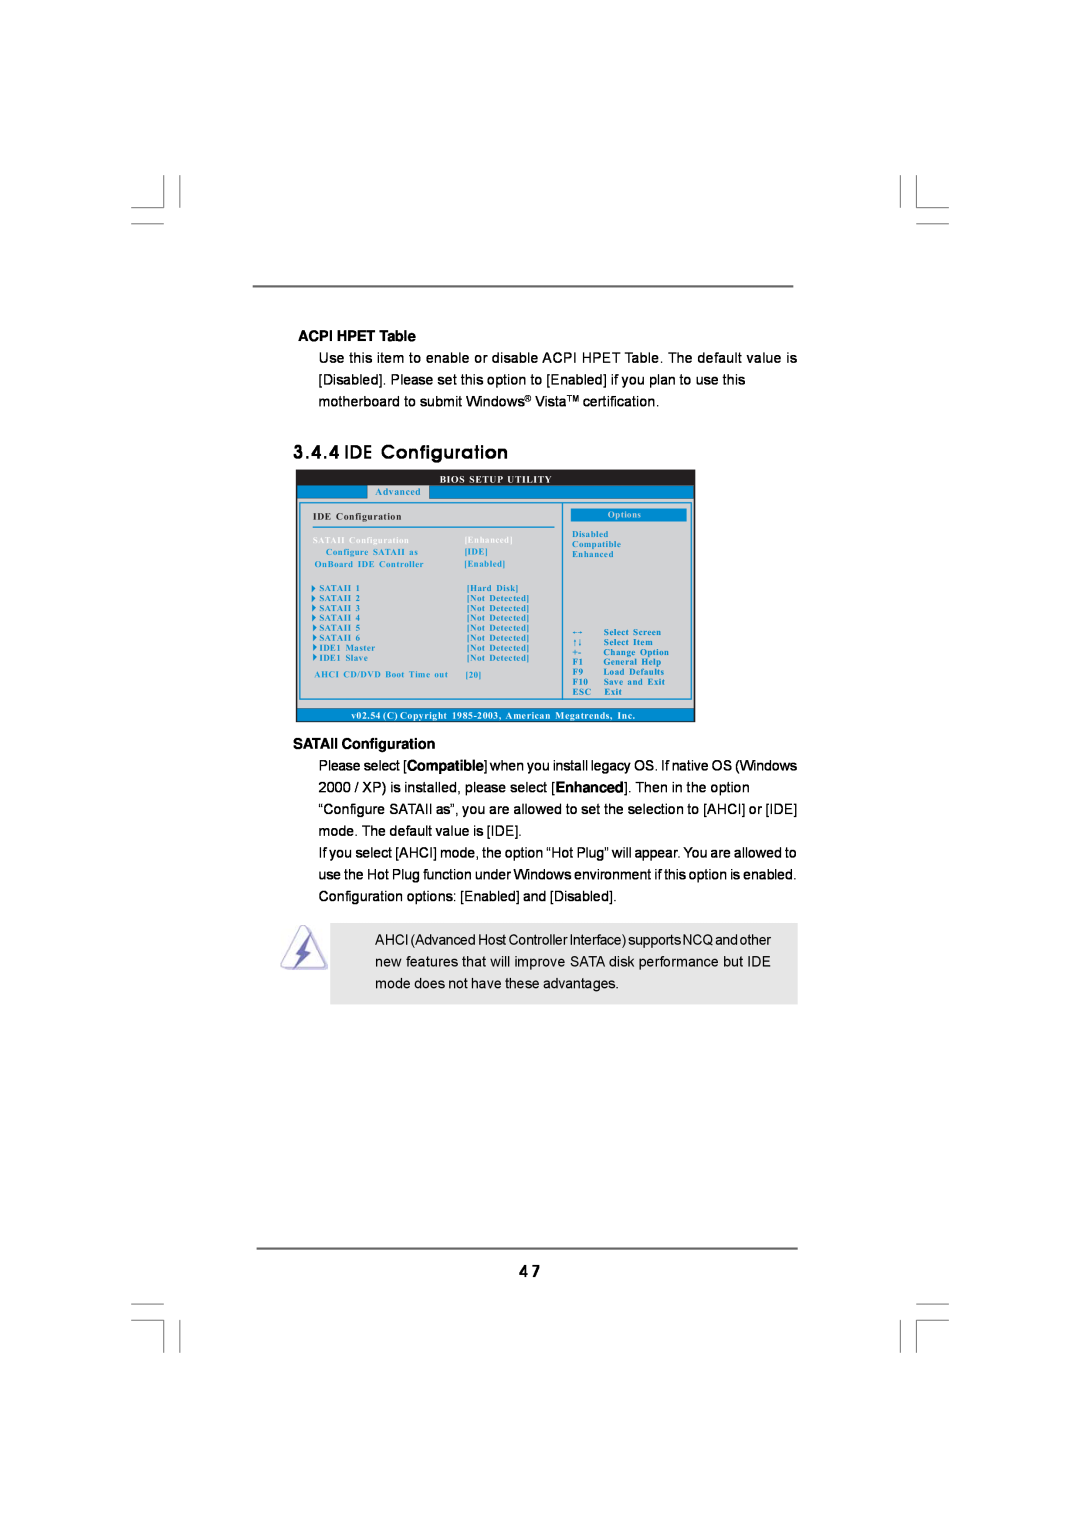 Magnavox G43TWINS-FULLHD user manual IDE Configuration, ACPI HPET Table, SATAII Configuration 